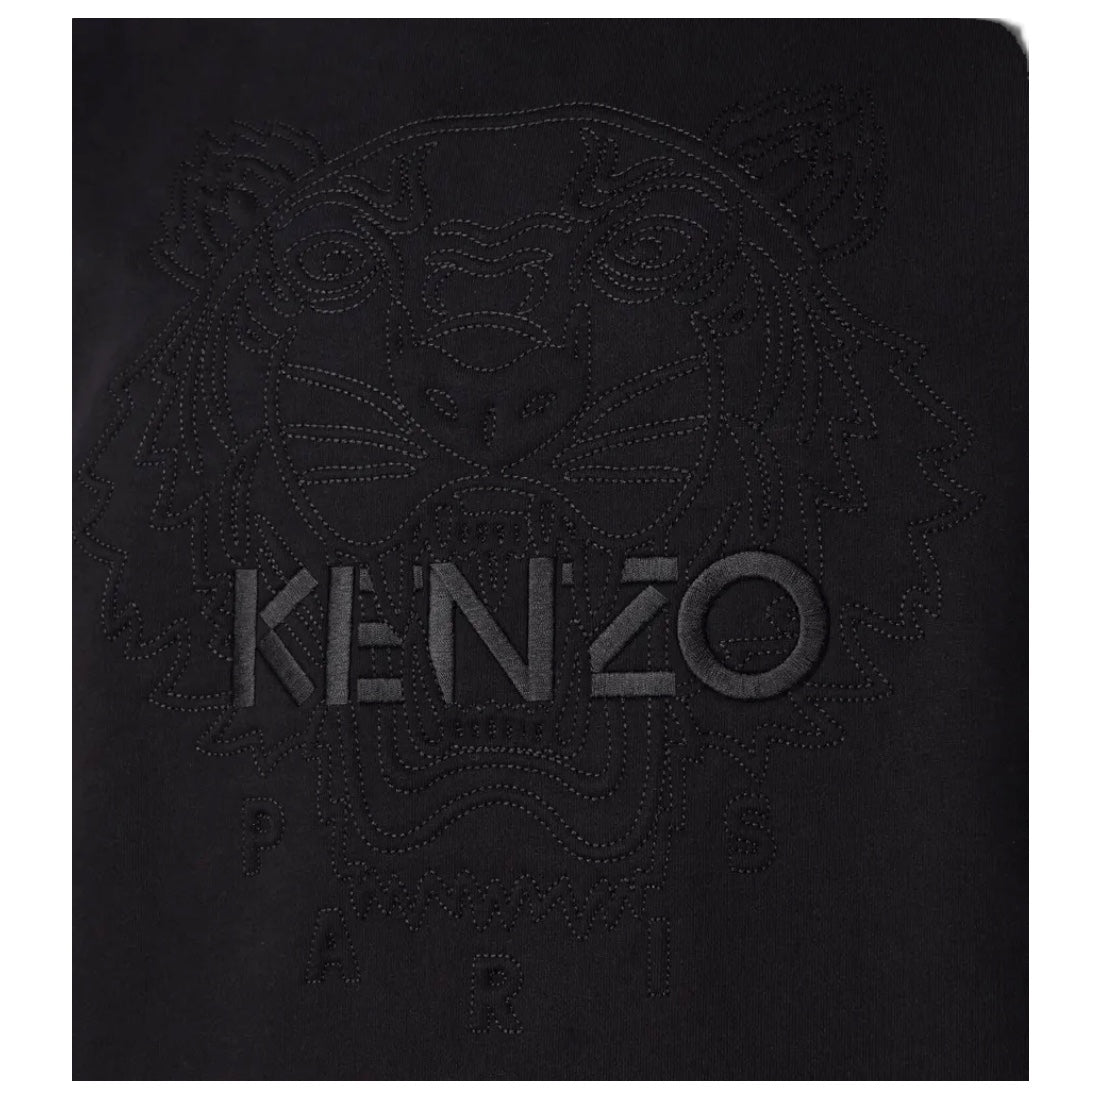 KENZO Embroidered Tiger Sweatshirt Black